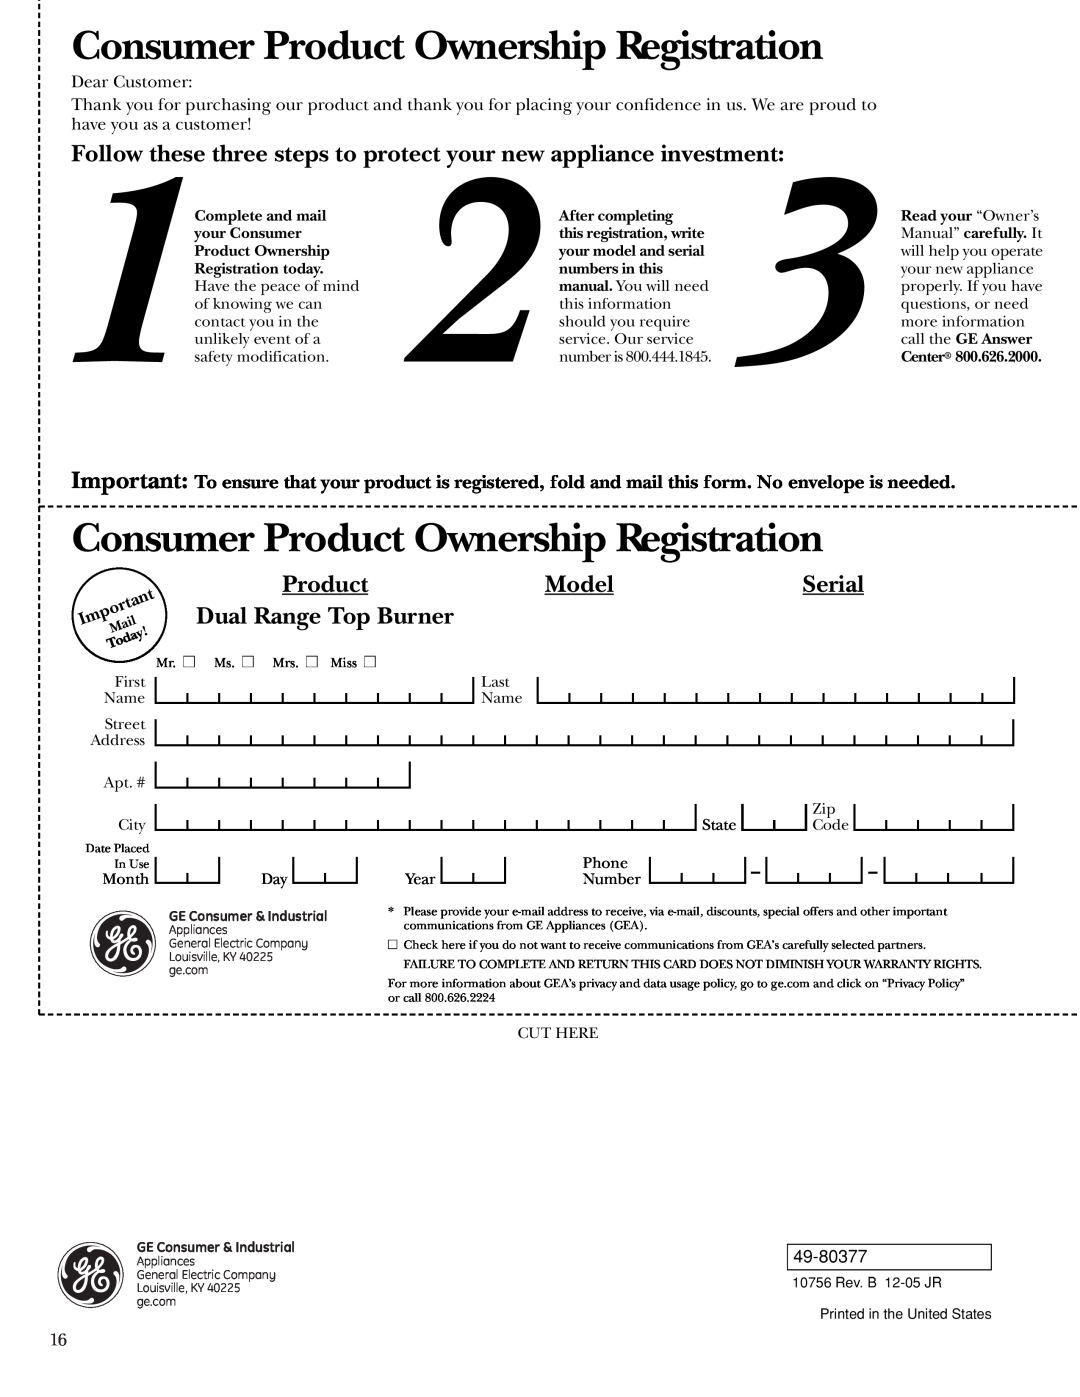 GE Monogram ZX2YSS owner manual Consumer Product Ownership Registration, Model, Dual Range Top Burner, Serial, 49-80377 